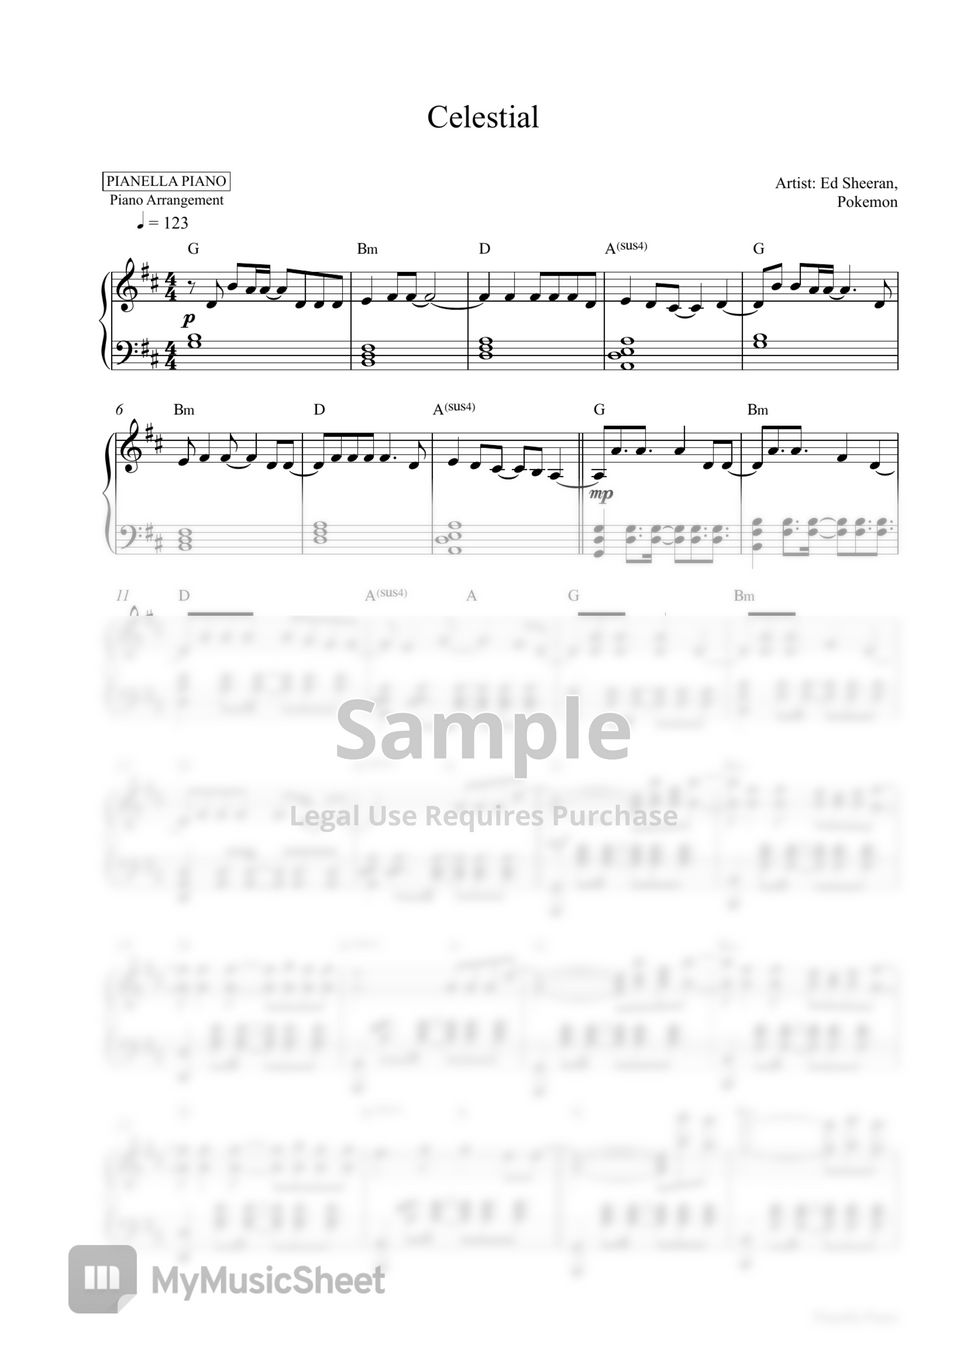 Ed Sheeran, Pokemon - Celestial (Piano Sheet) by Pianella Piano